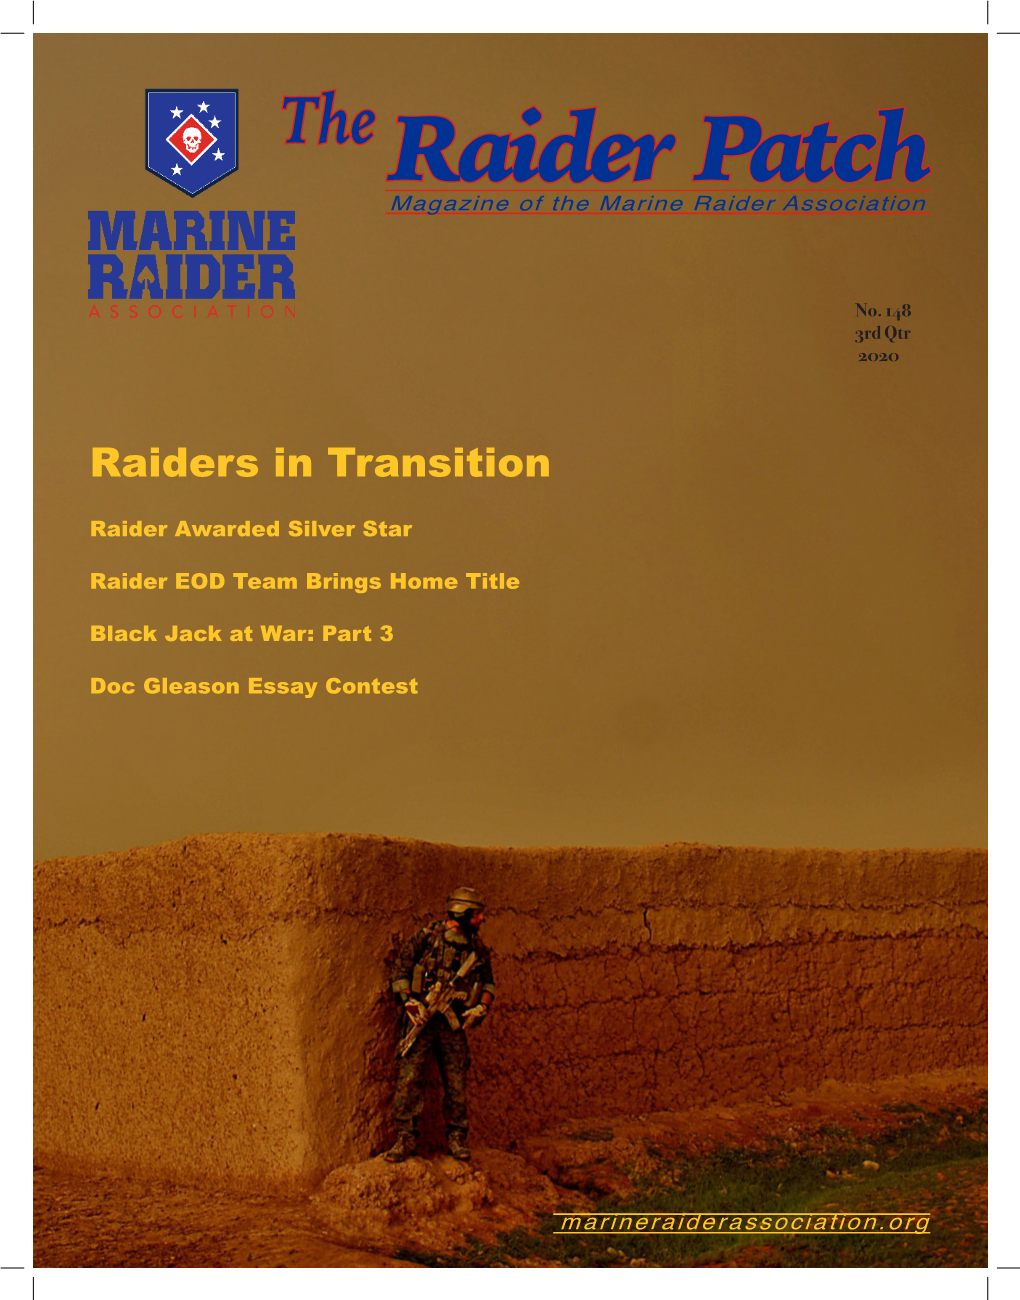 Raider Patch Magazine of the Marine Raider Association